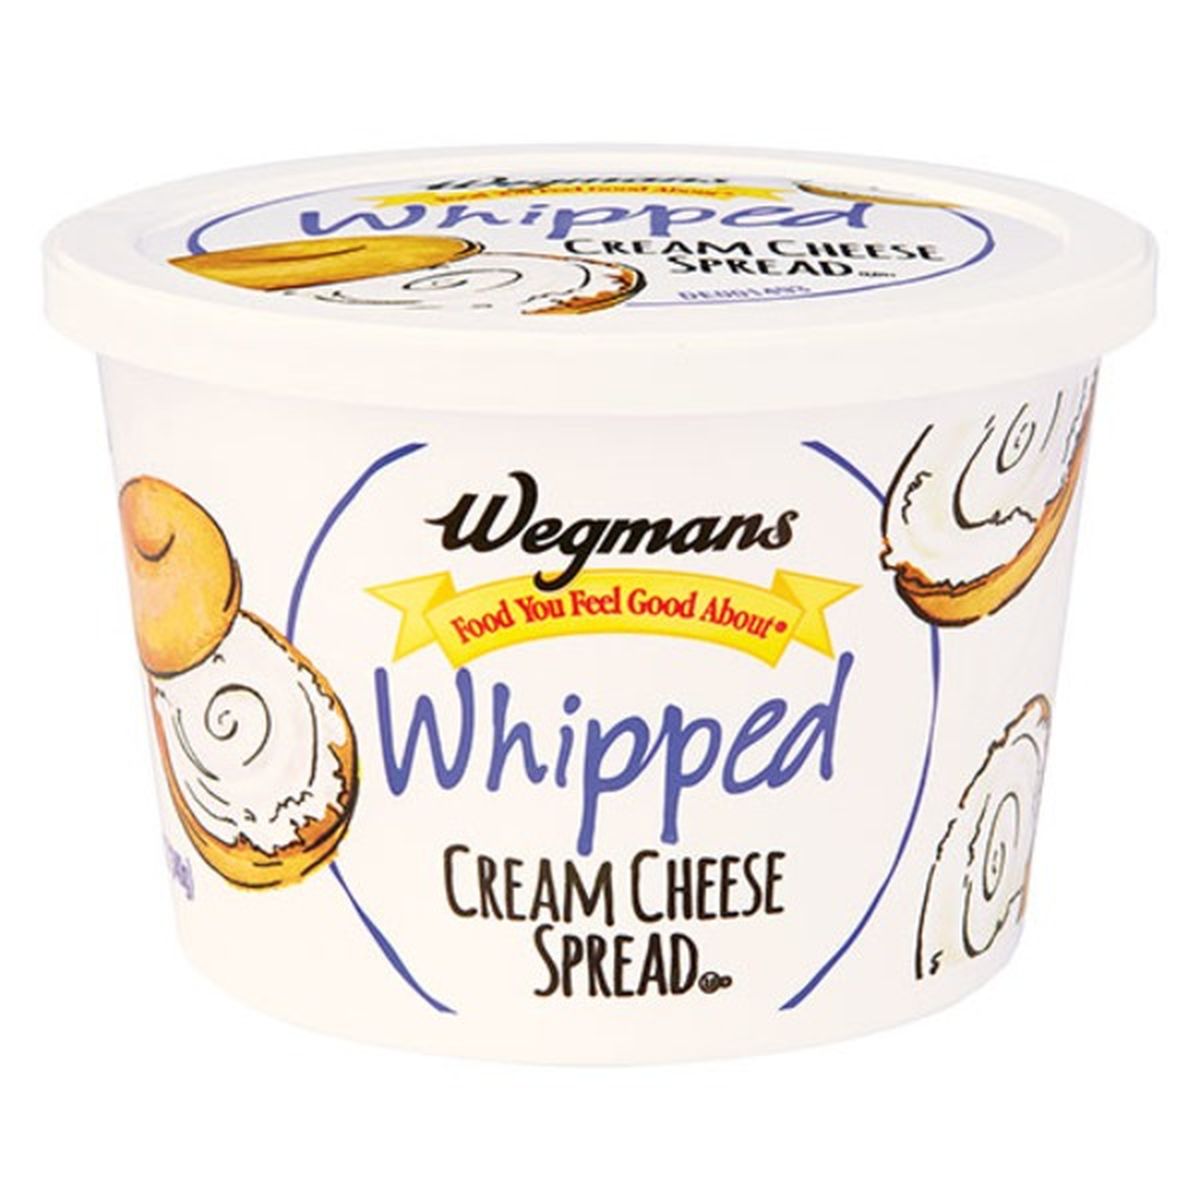 Calories in Wegmans Whipped Cream Cheese Spread